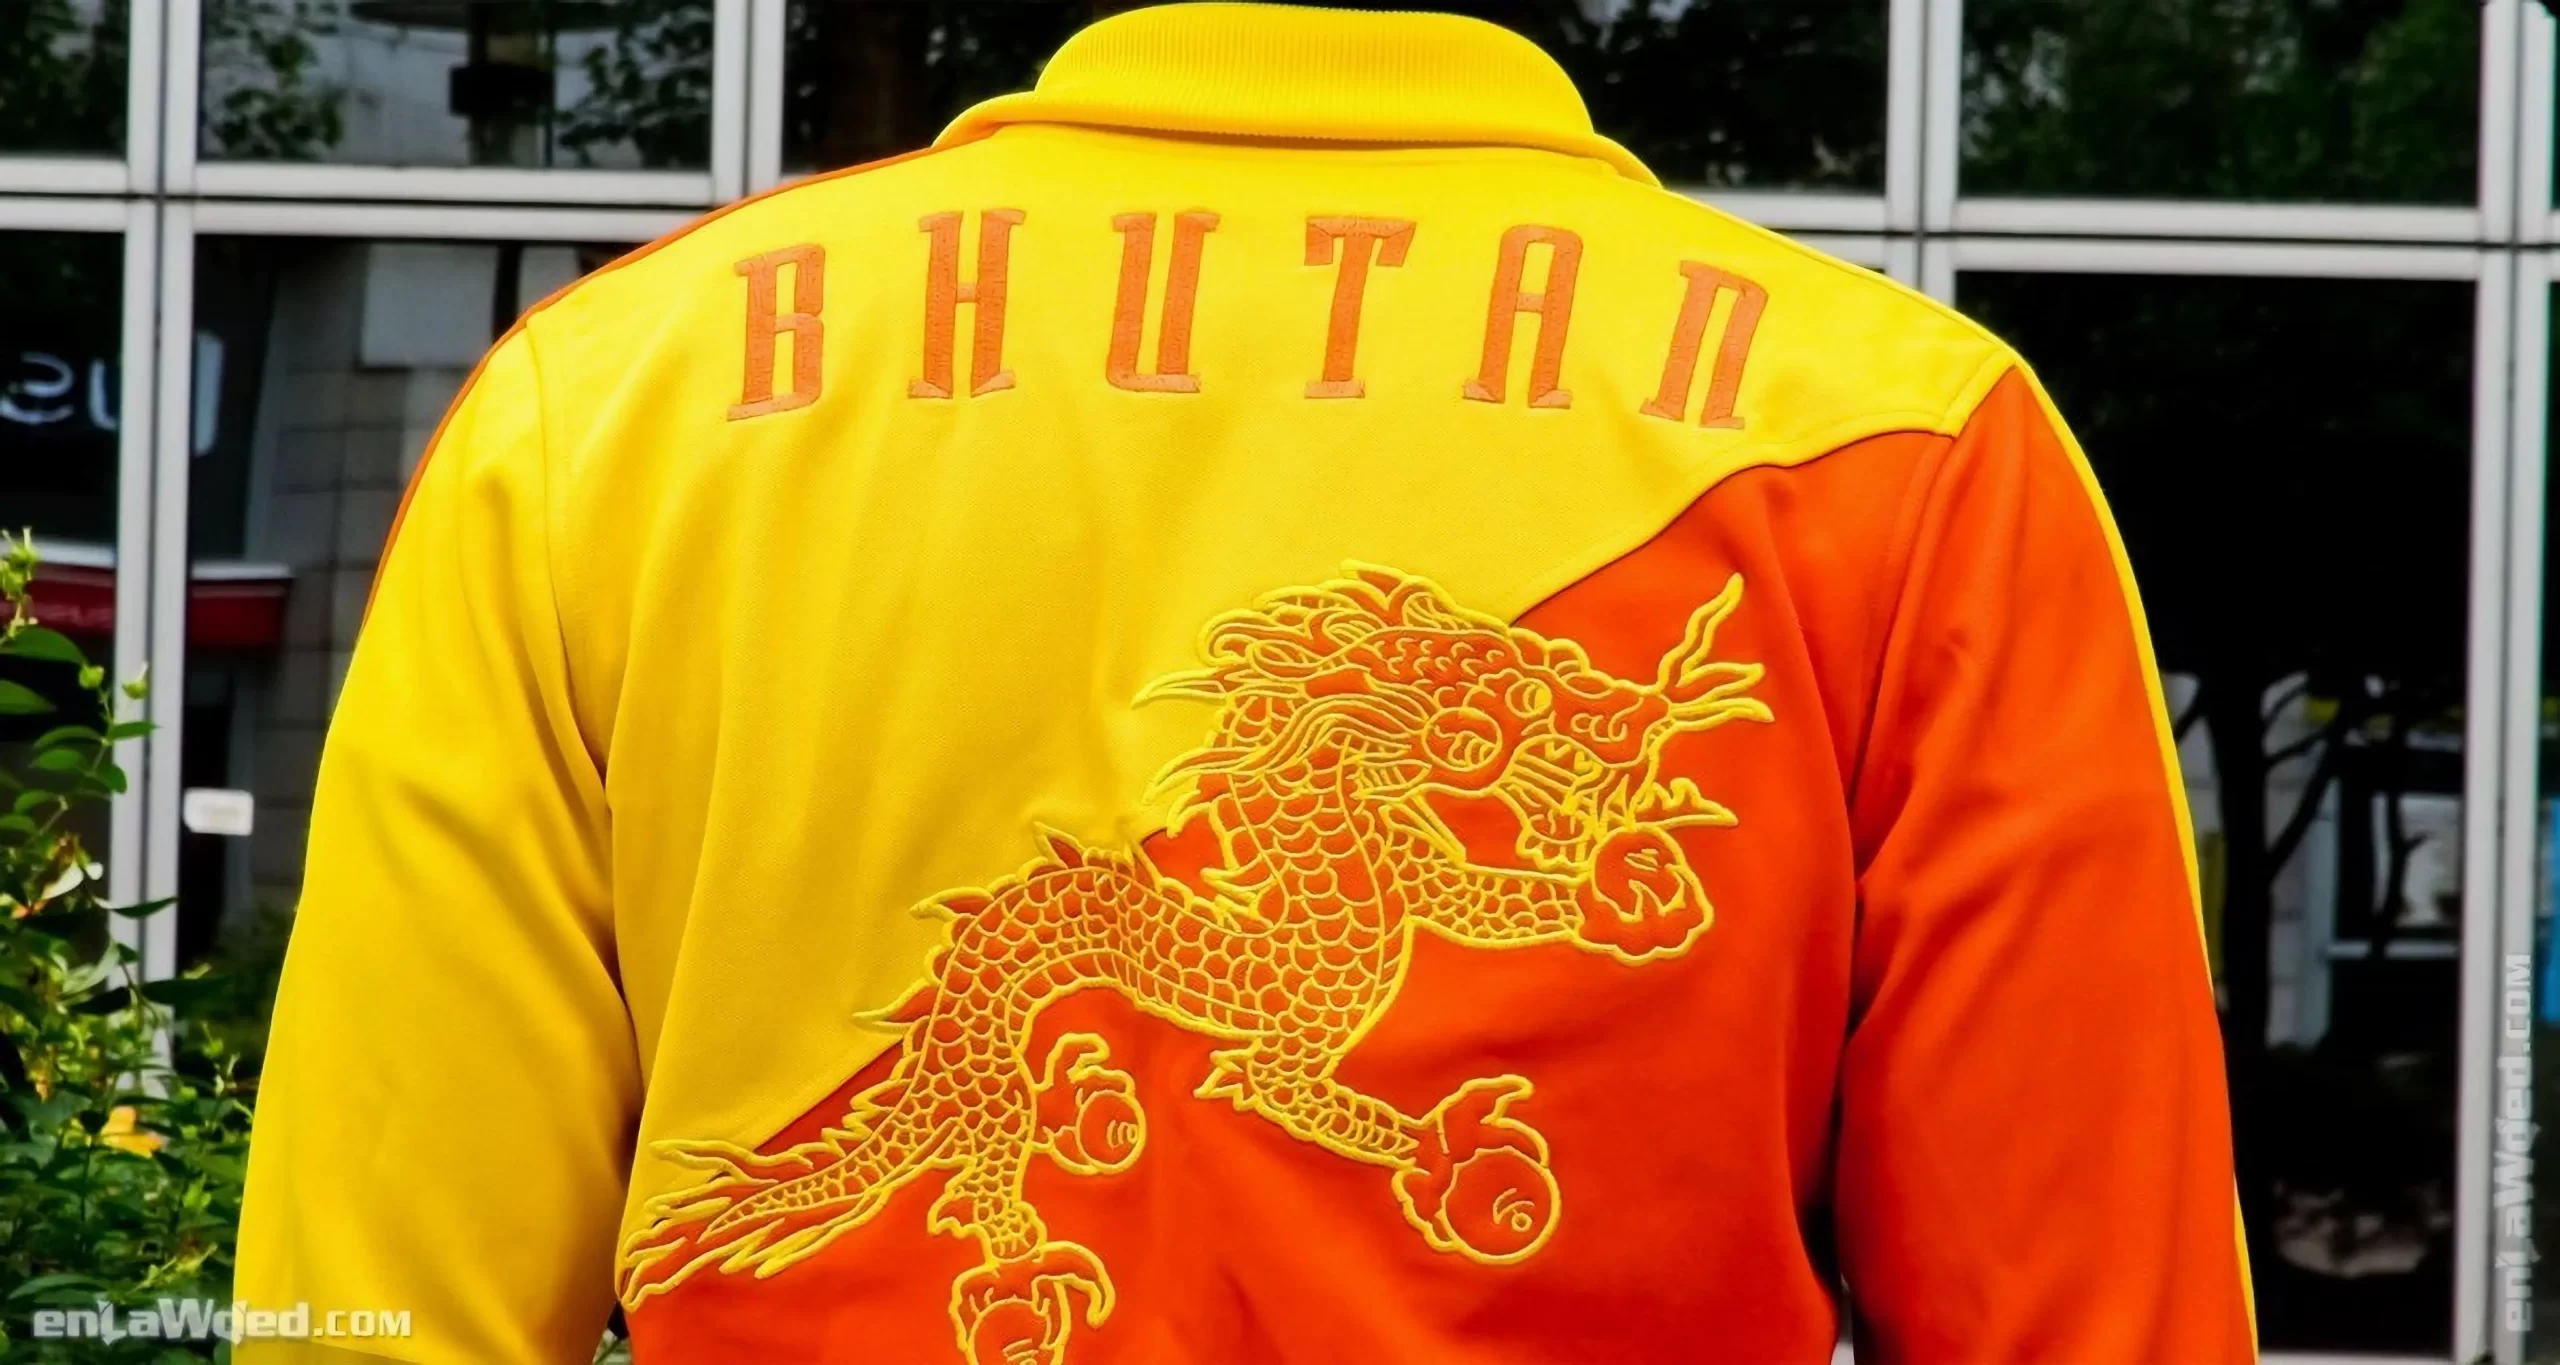 Men’s 2007 Bhutan Track Top by Adidas Originals: Arrogant (EnLawded.com file #lmchk90649ip2y123230kg9st)